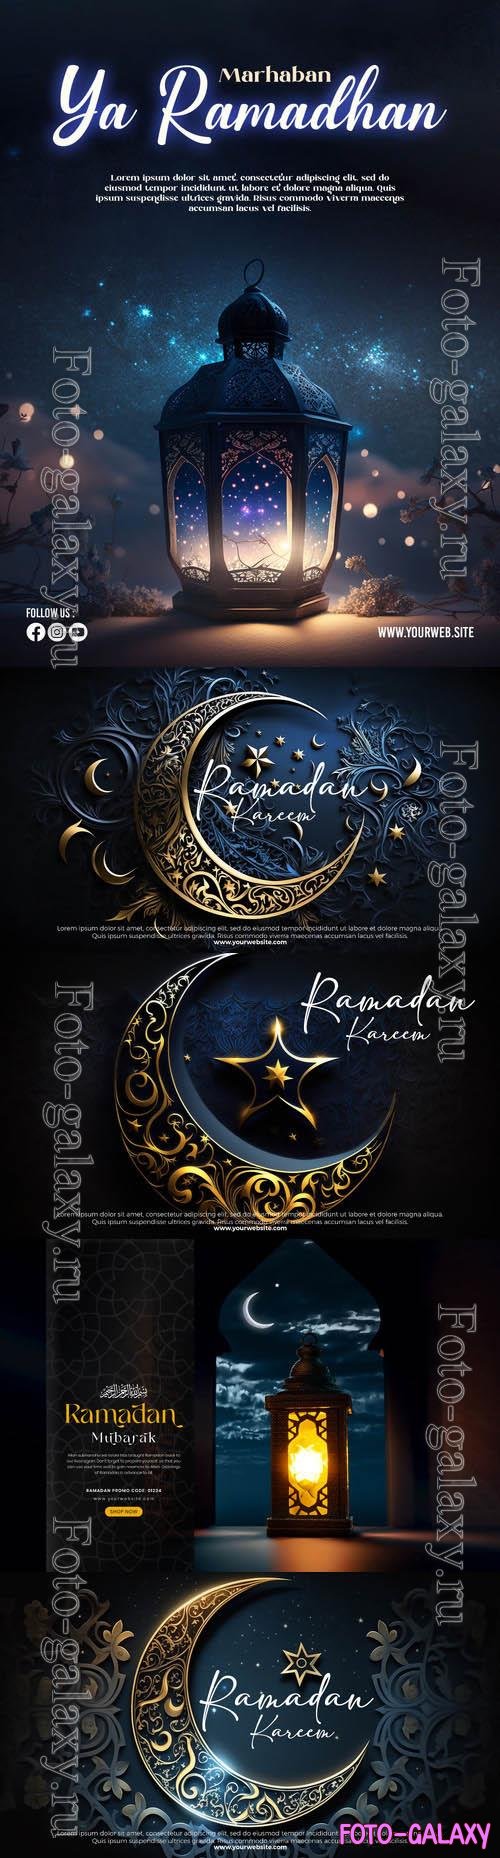 PSD ramadan kareem banner template with 3d render islamic background